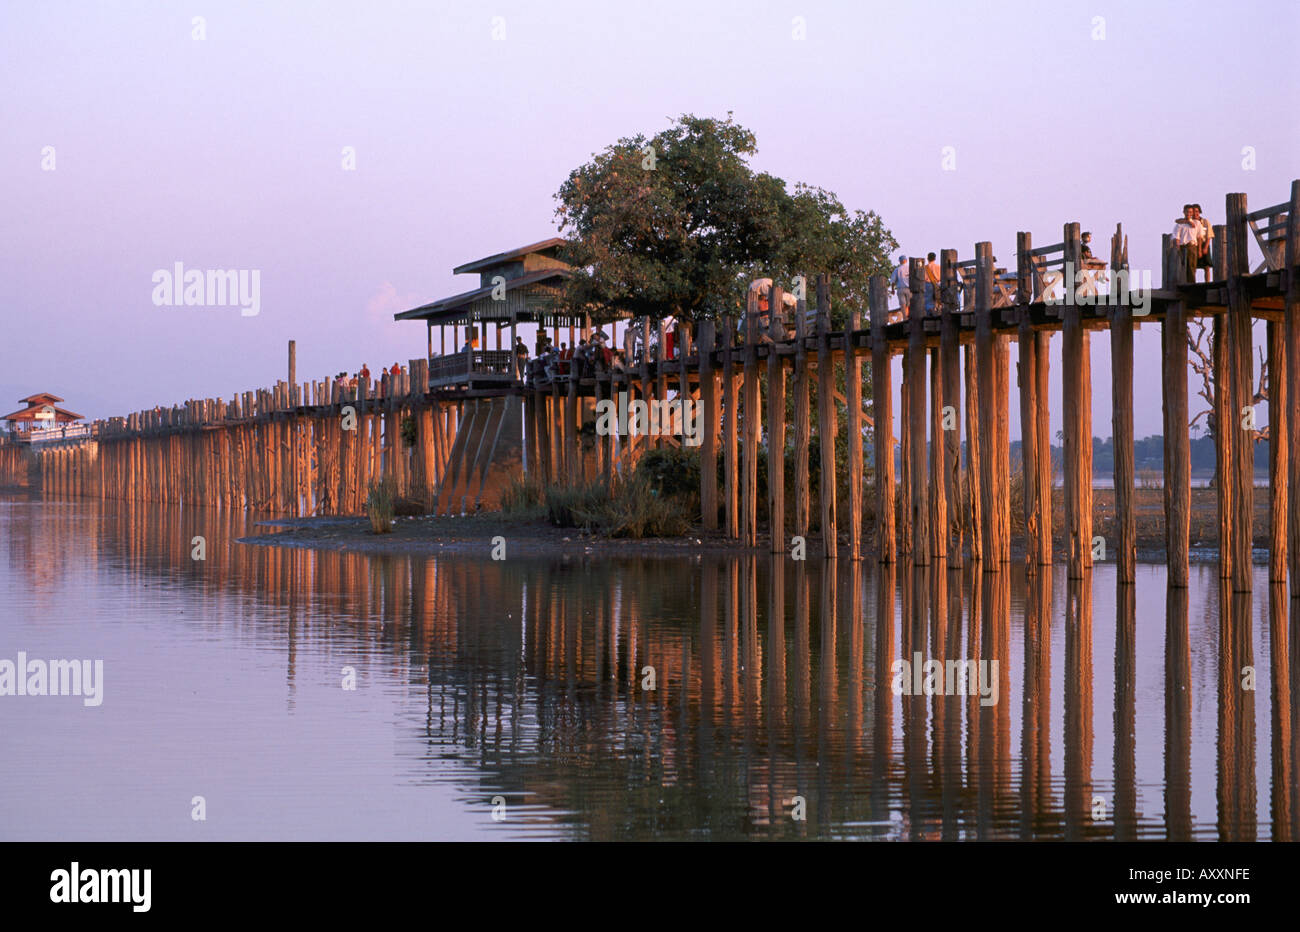 Inwa, U-Bein-Brücke, Längste Teakholzbrücke der Welt Foto Stock